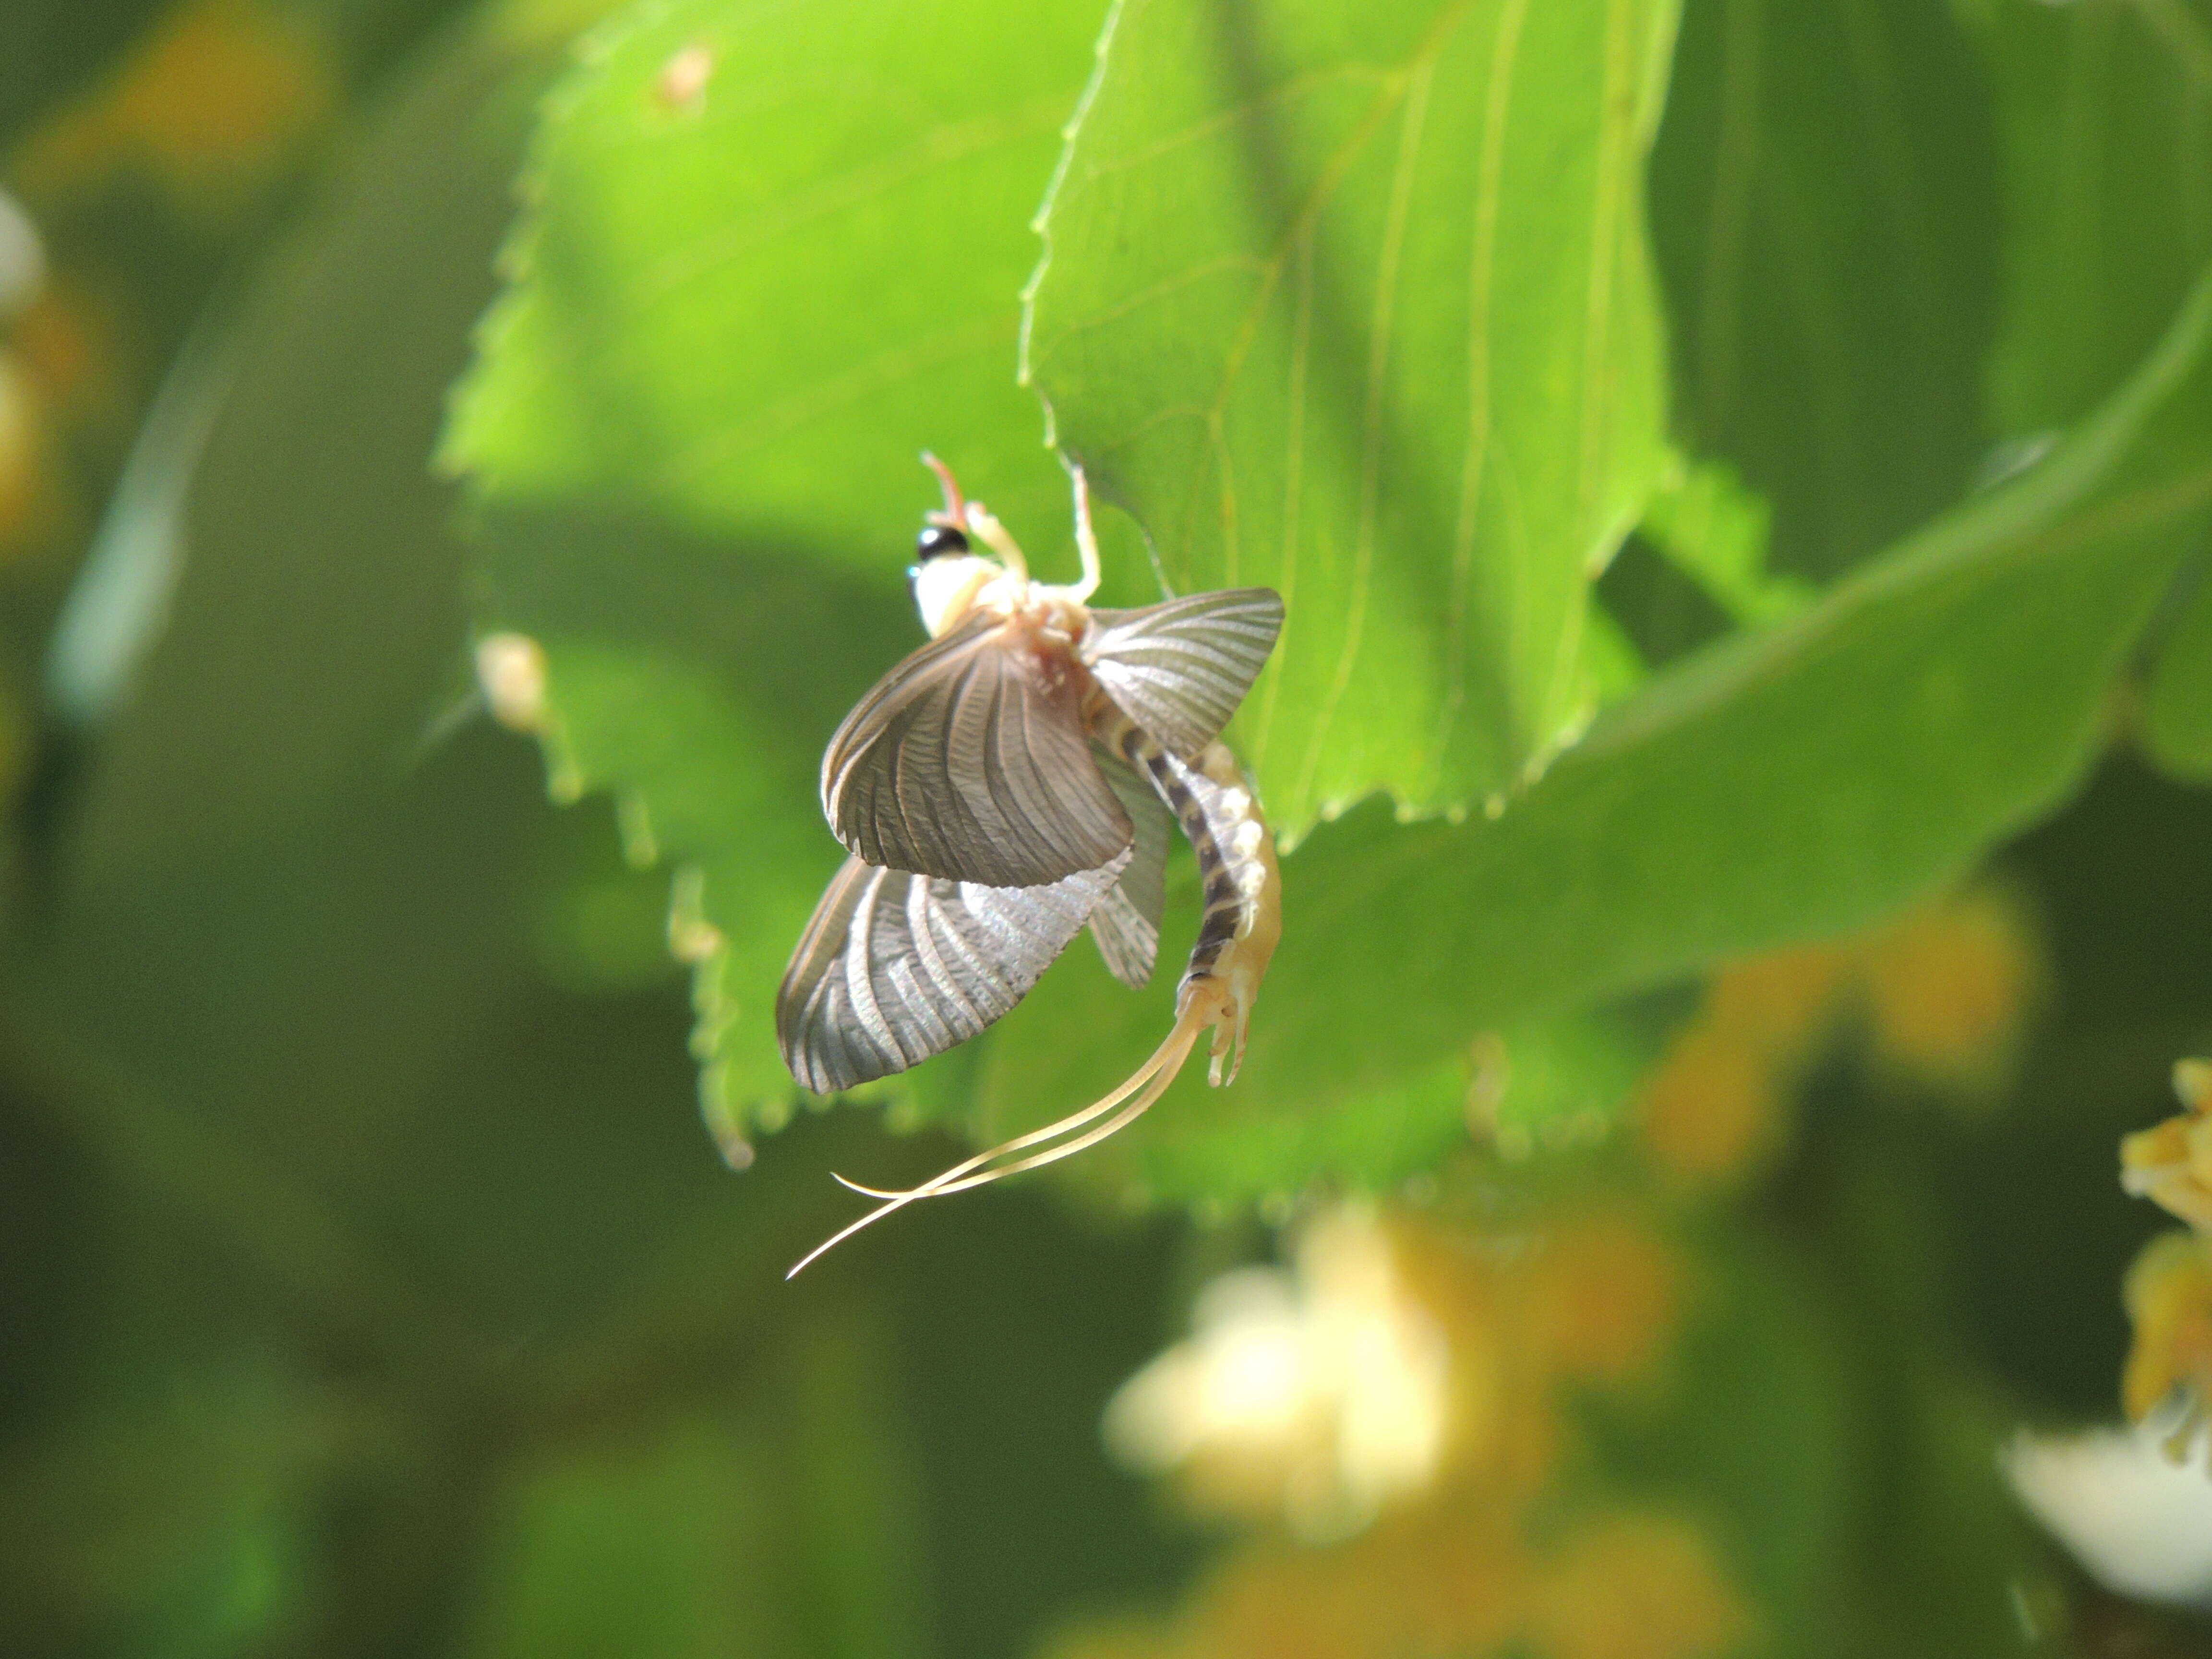 Image of riverbed burrower mayflies